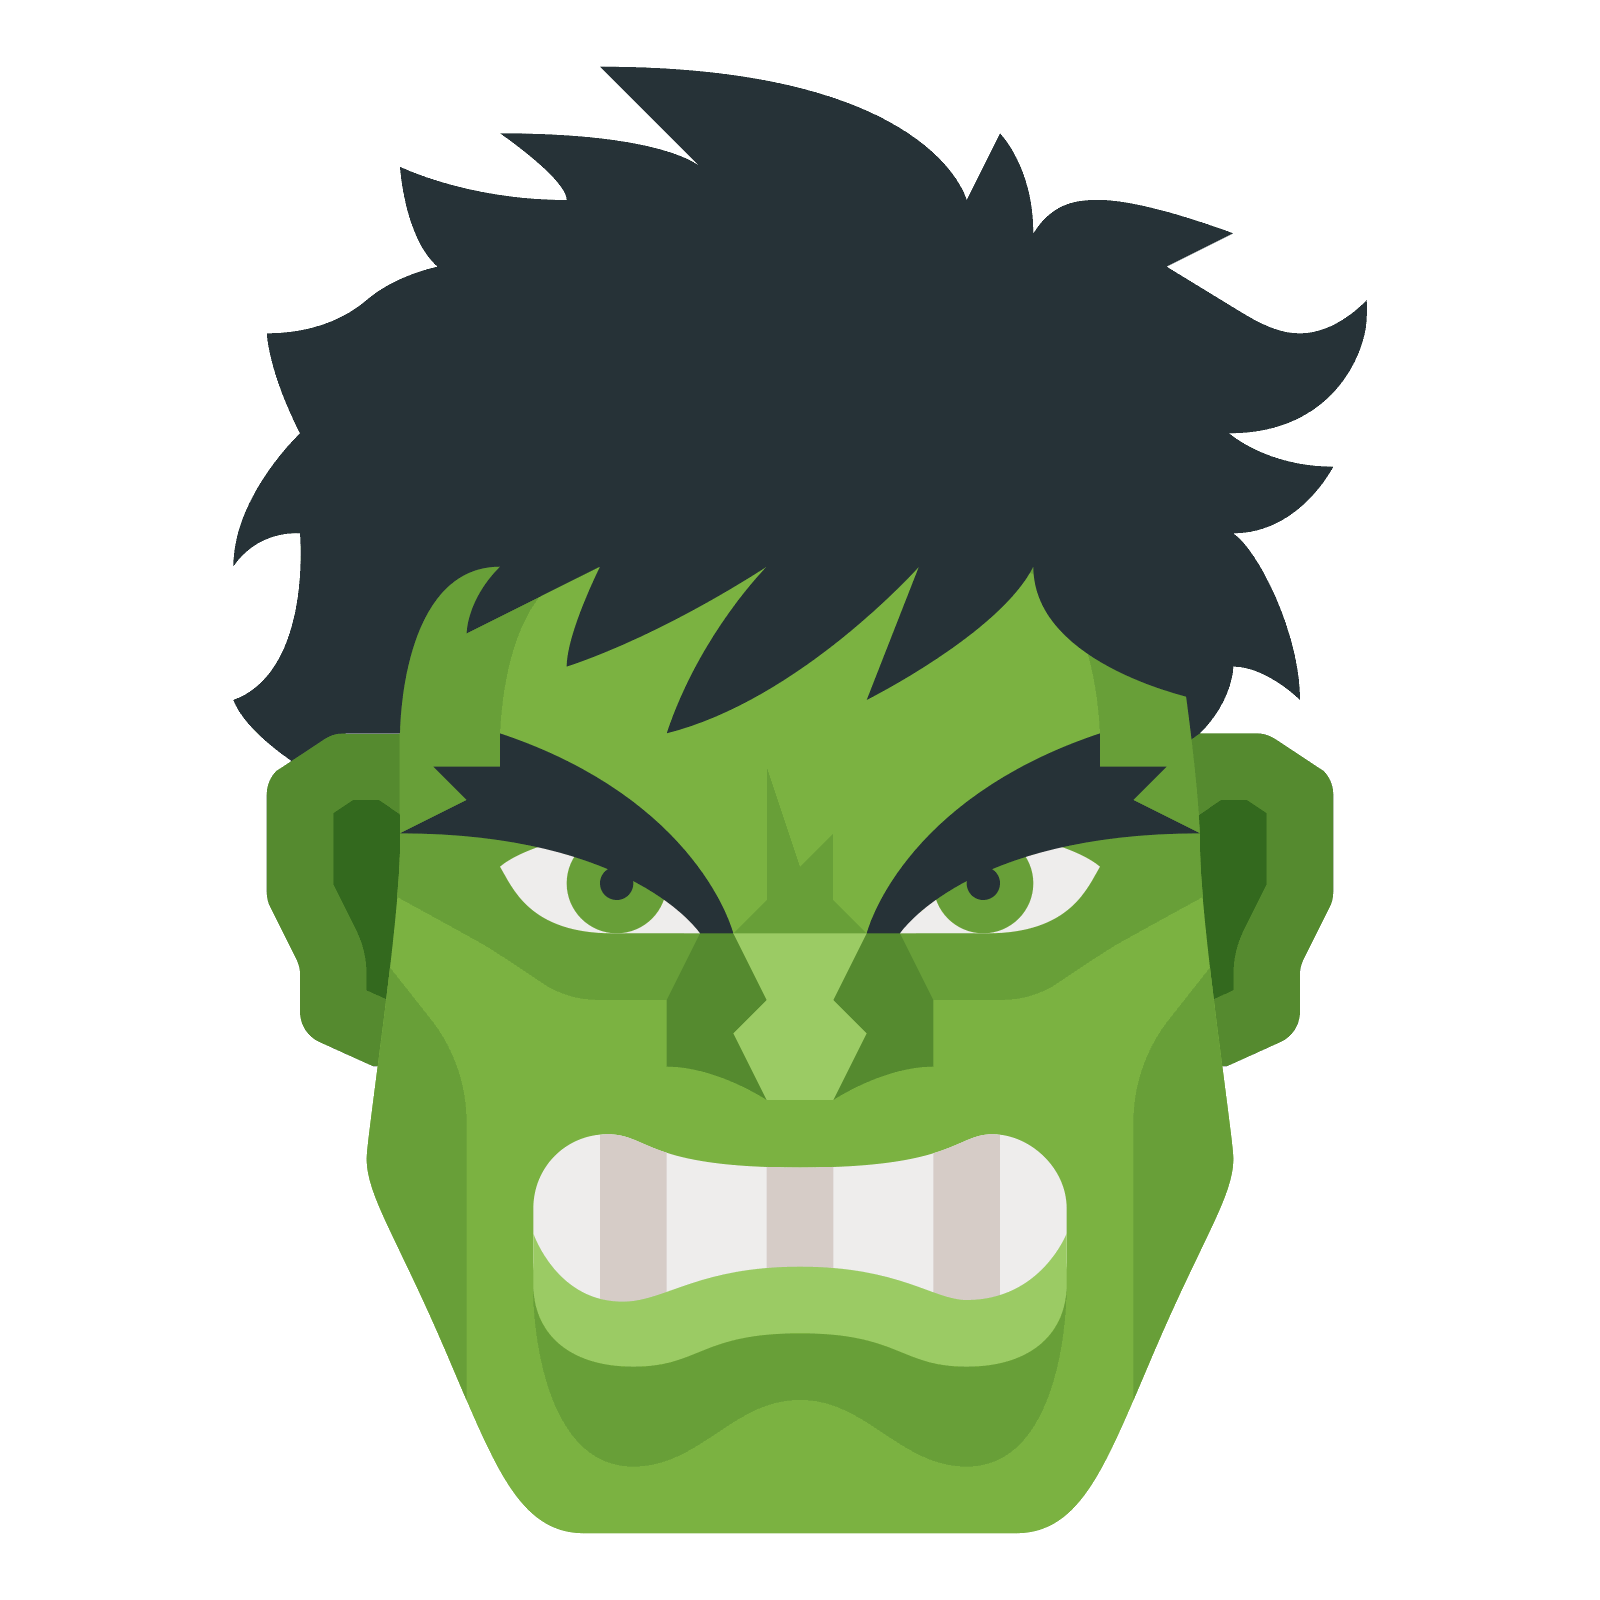 Hulk Icons - Download 14 Free Hulk icons here